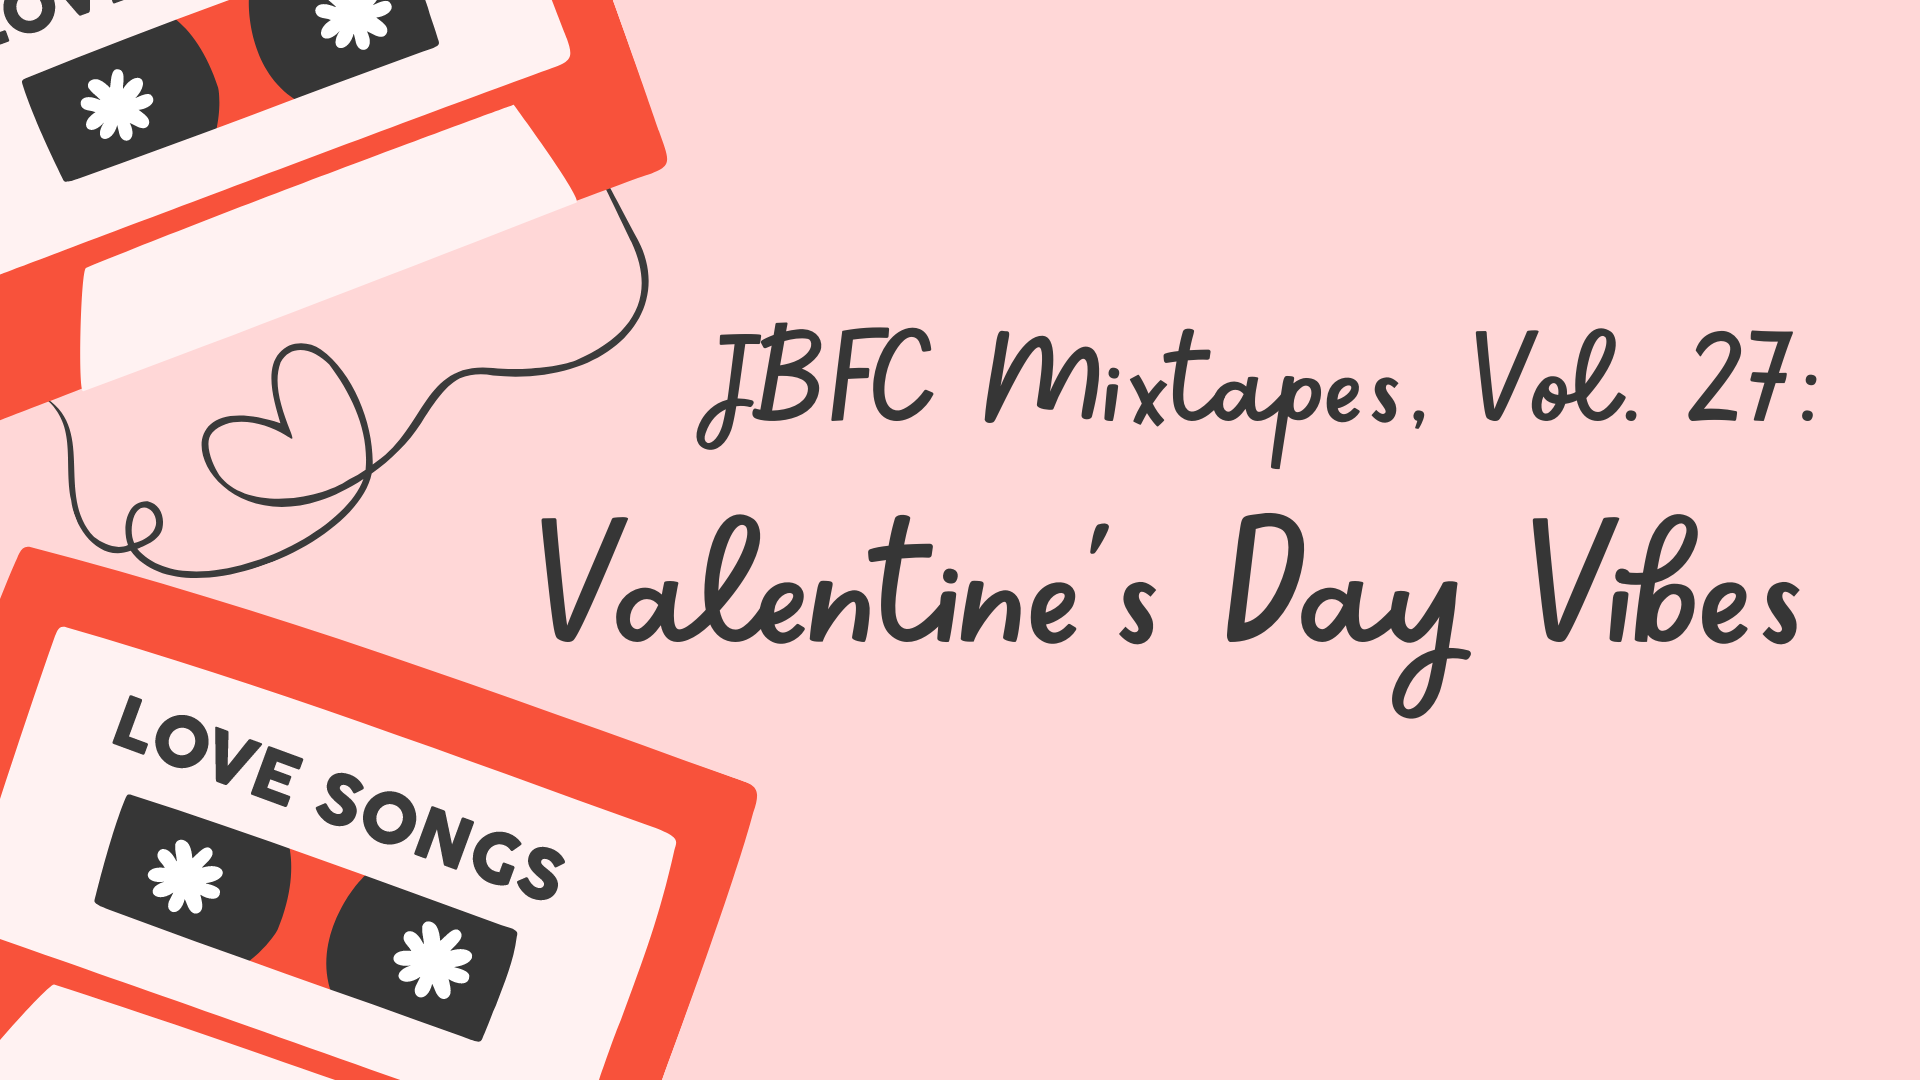 JBFC Mixtapes, Vol. 27: Valentine’s Day Vibes